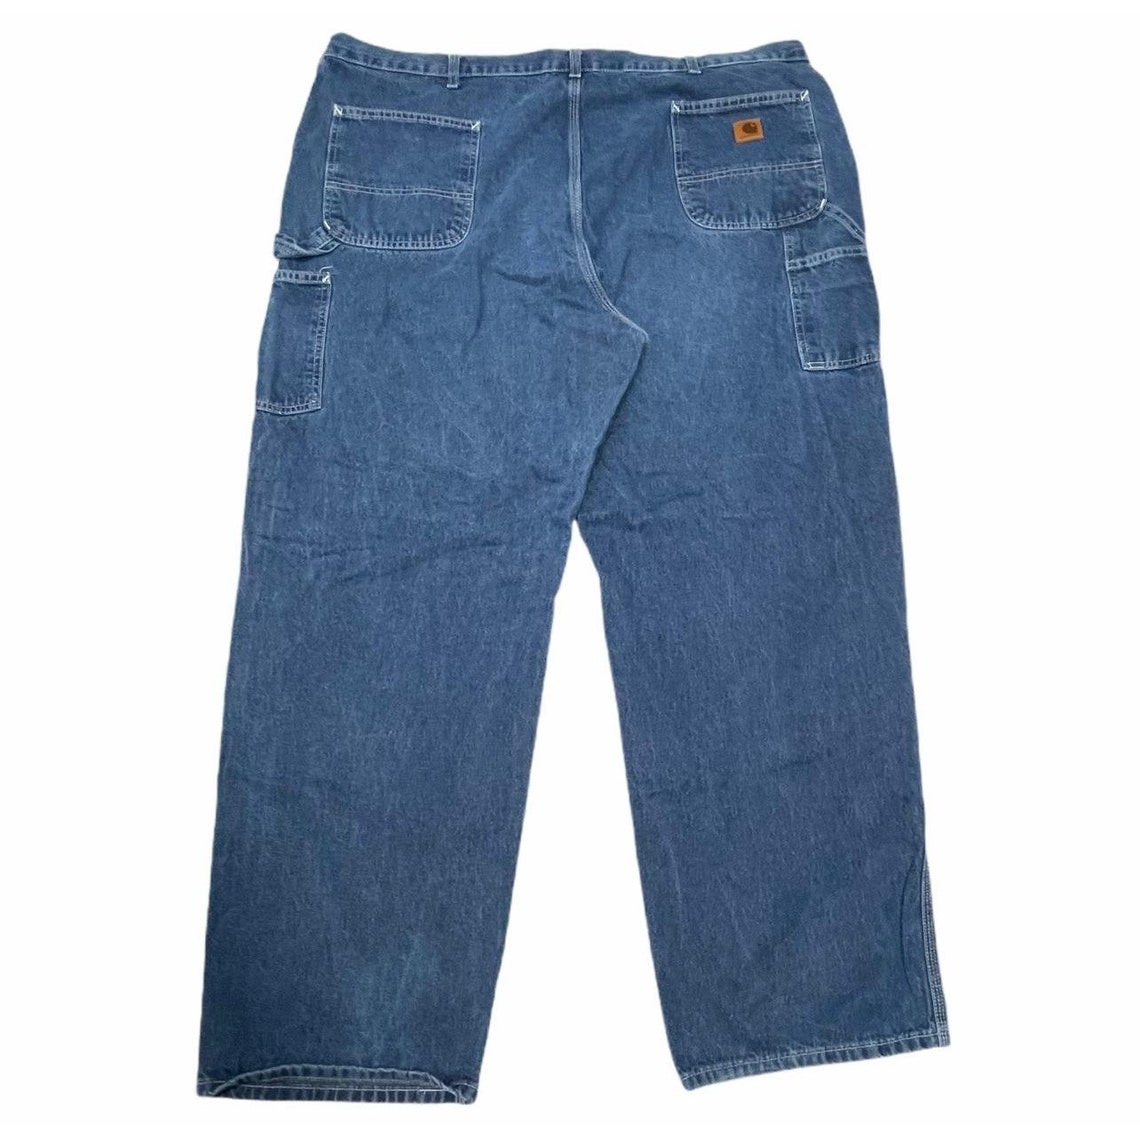 Lot of 2 Carhartt Original Dungaree Fit Pants Jeans Mens Size | Etsy